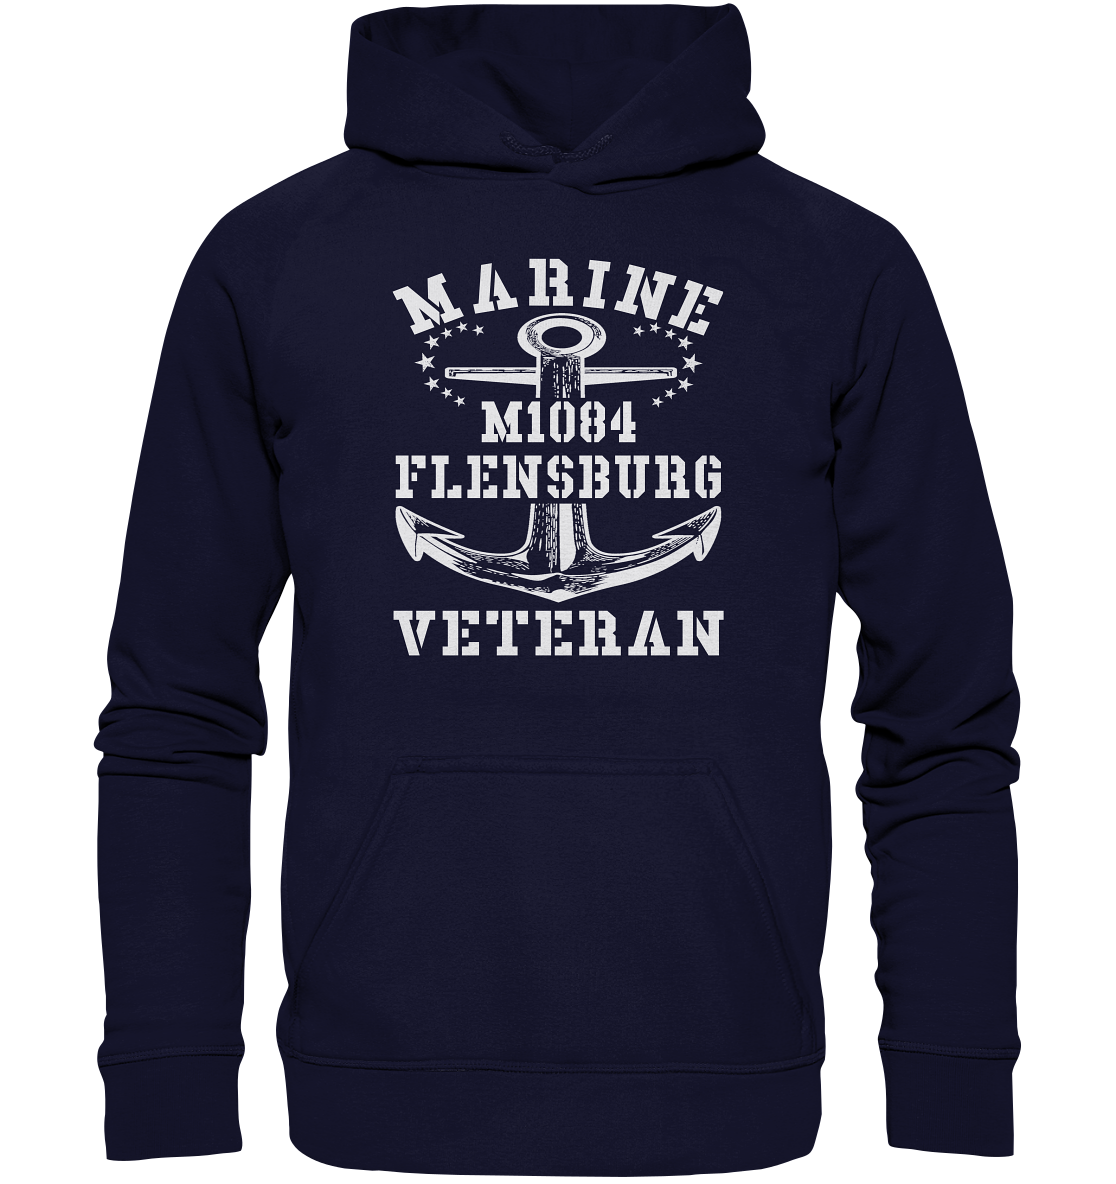 Marine Veteran M1084 FLENSBURG - Basic Unisex Hoodie XL